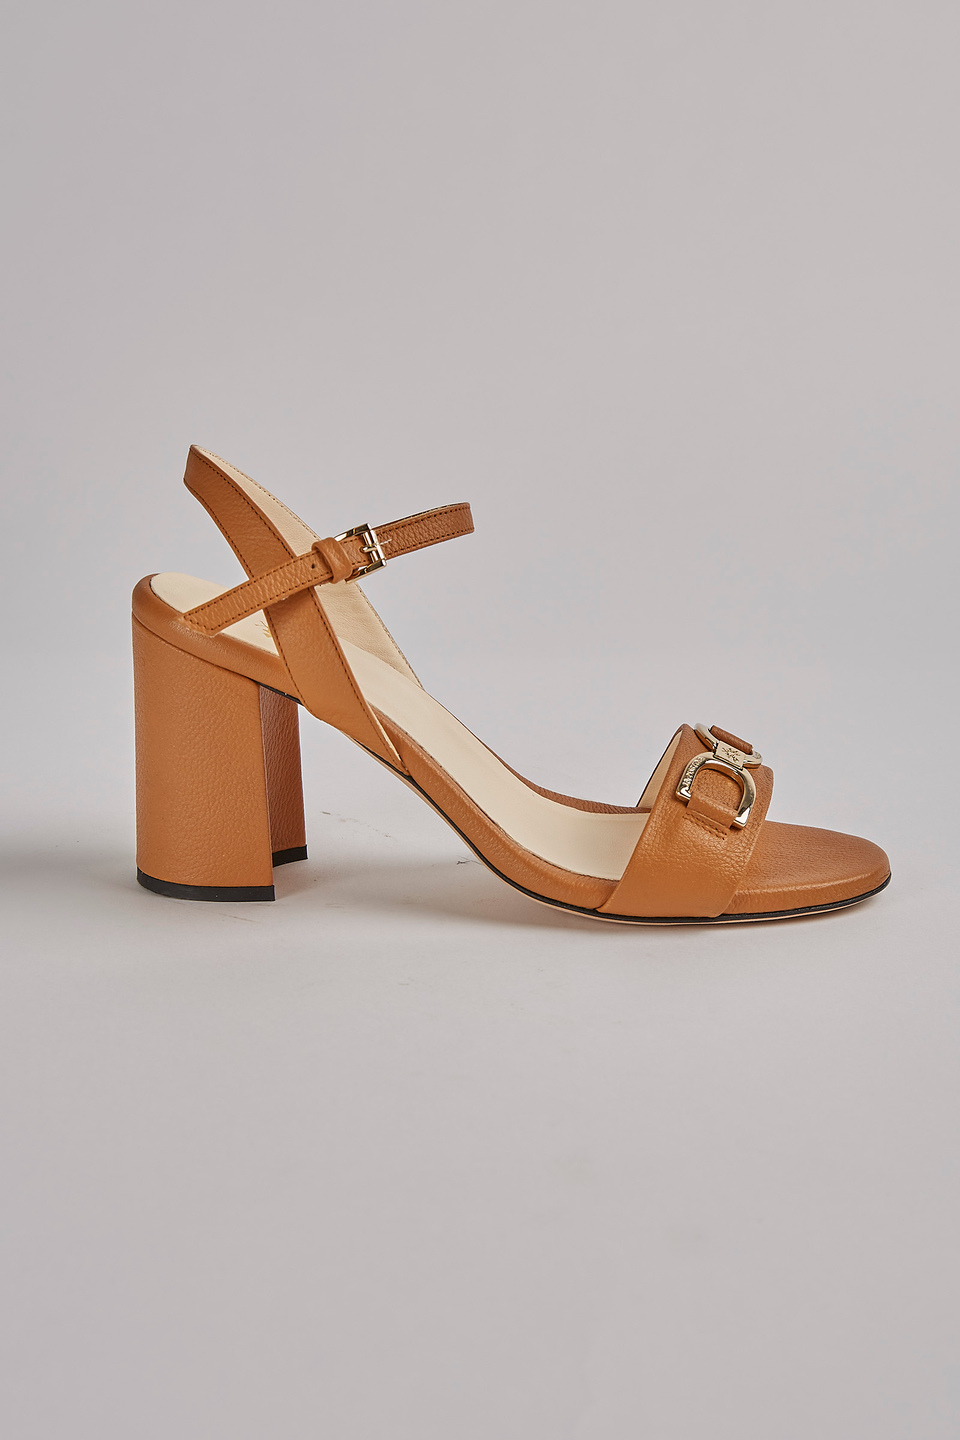 Sandalo in pelle | La Martina - Official Online Shop